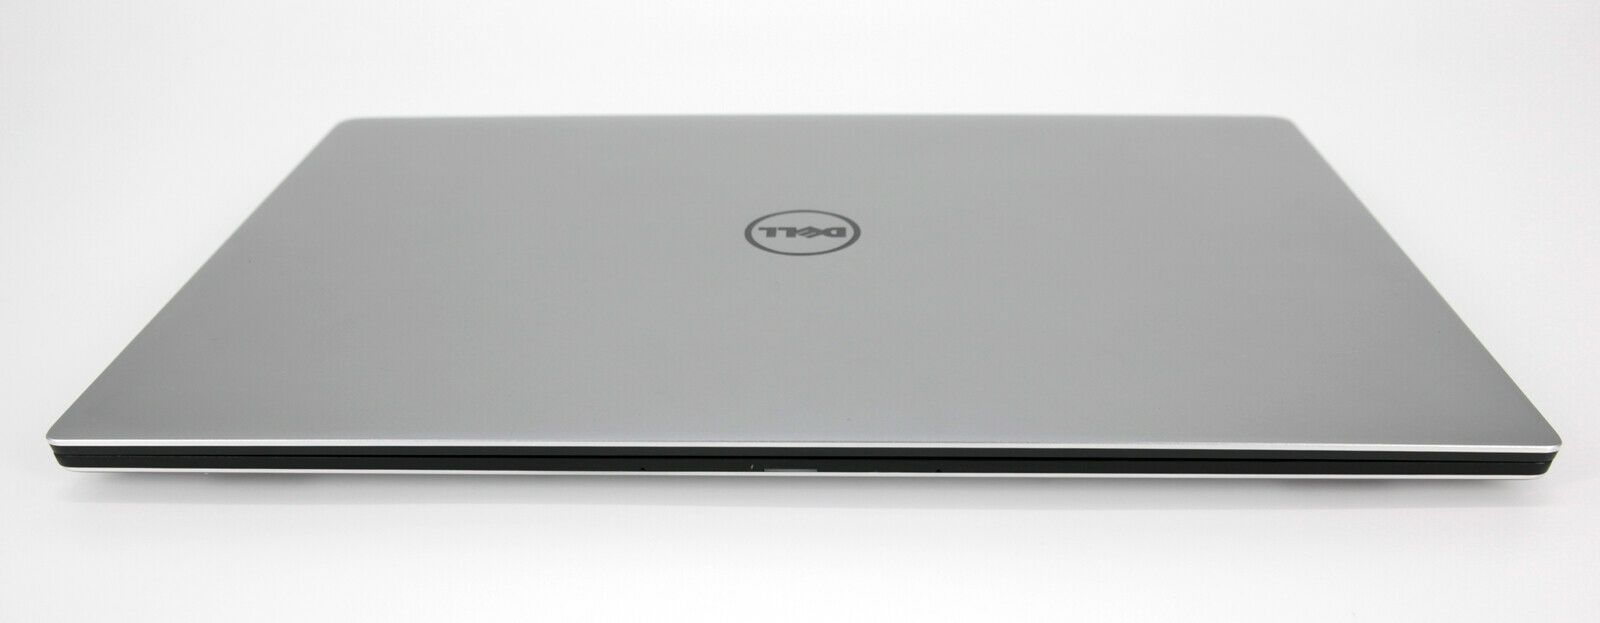 Dell Precision 5510 15.6" FHD Laptop: 16GB RAM, Core i5, 1TB HDD - CruiseTech